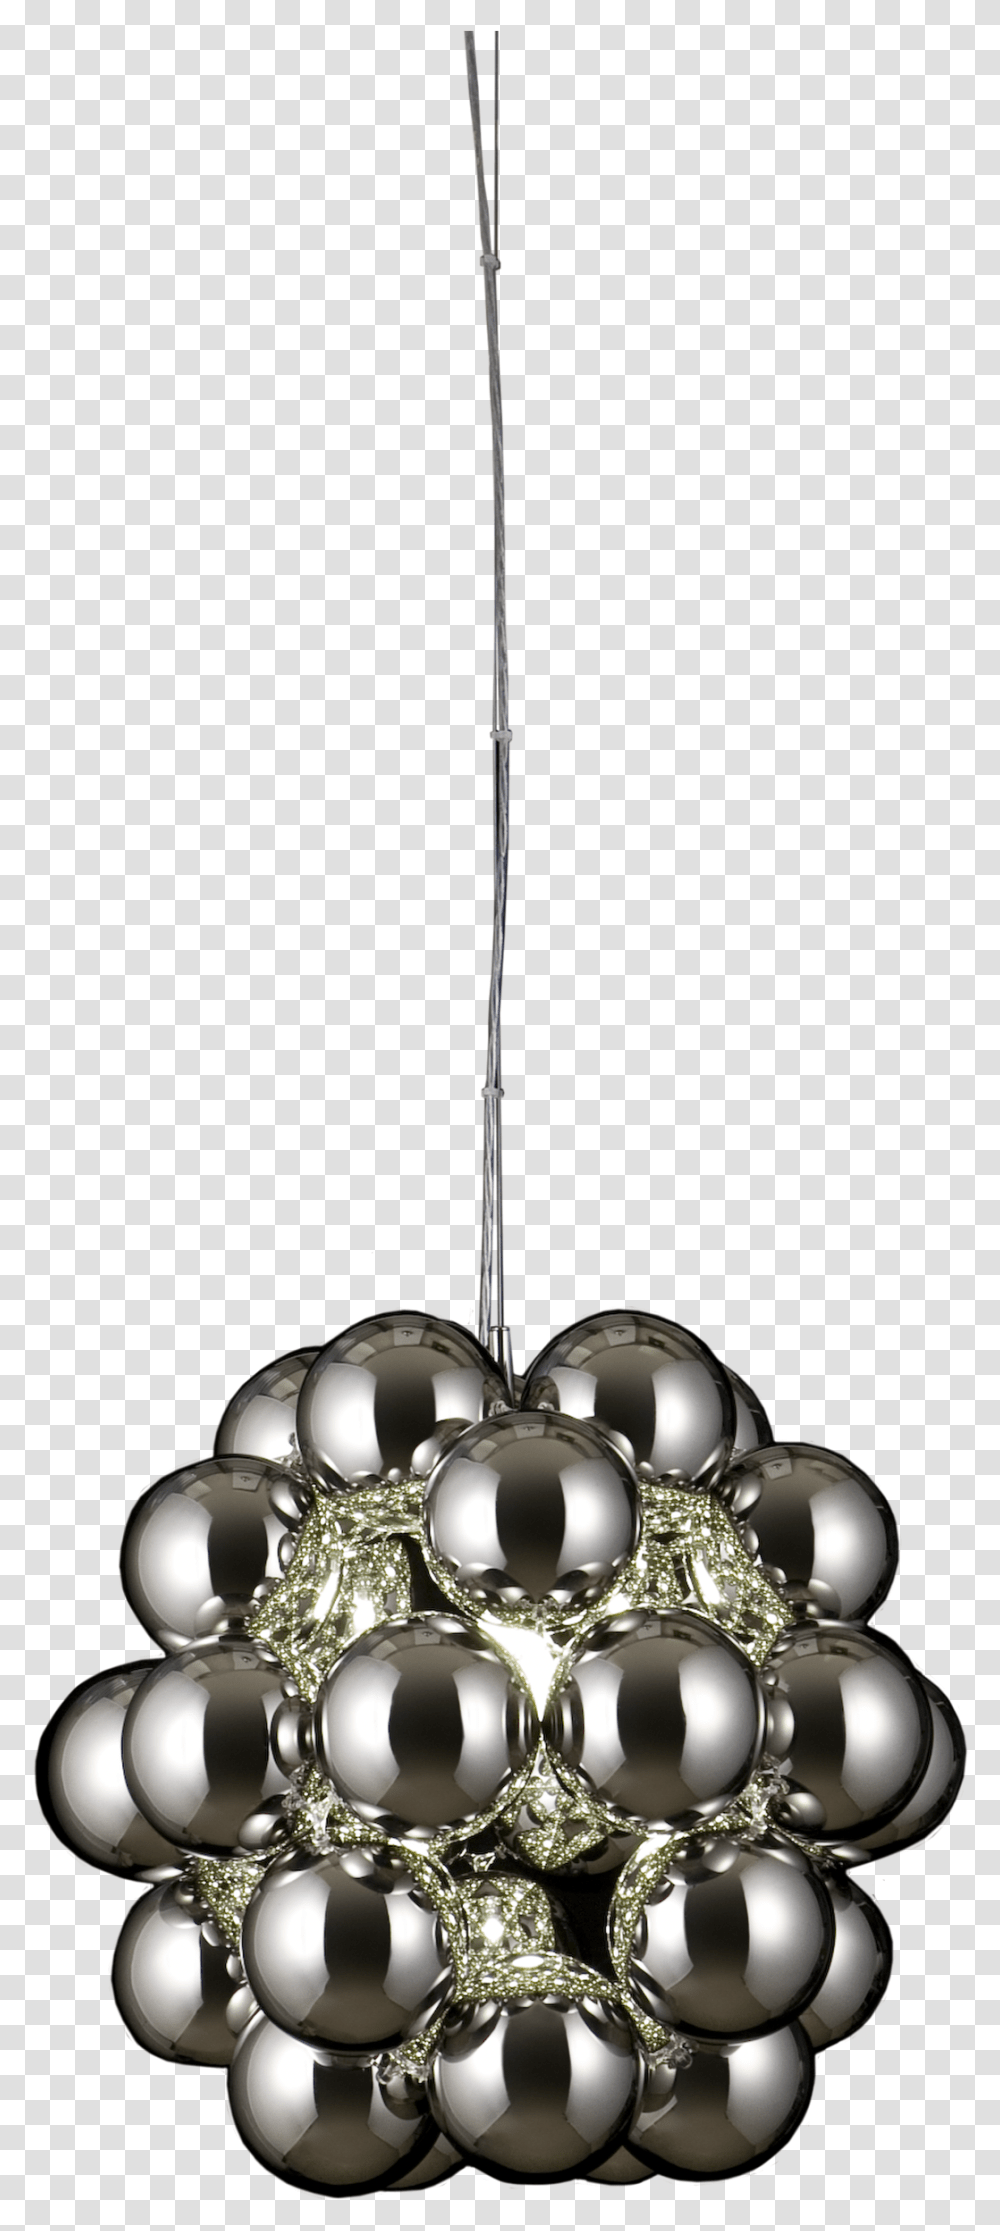 High Resolution Images Cluster Ball Pendant Light, Lamp, Chandelier, Ceiling Light, Light Fixture Transparent Png